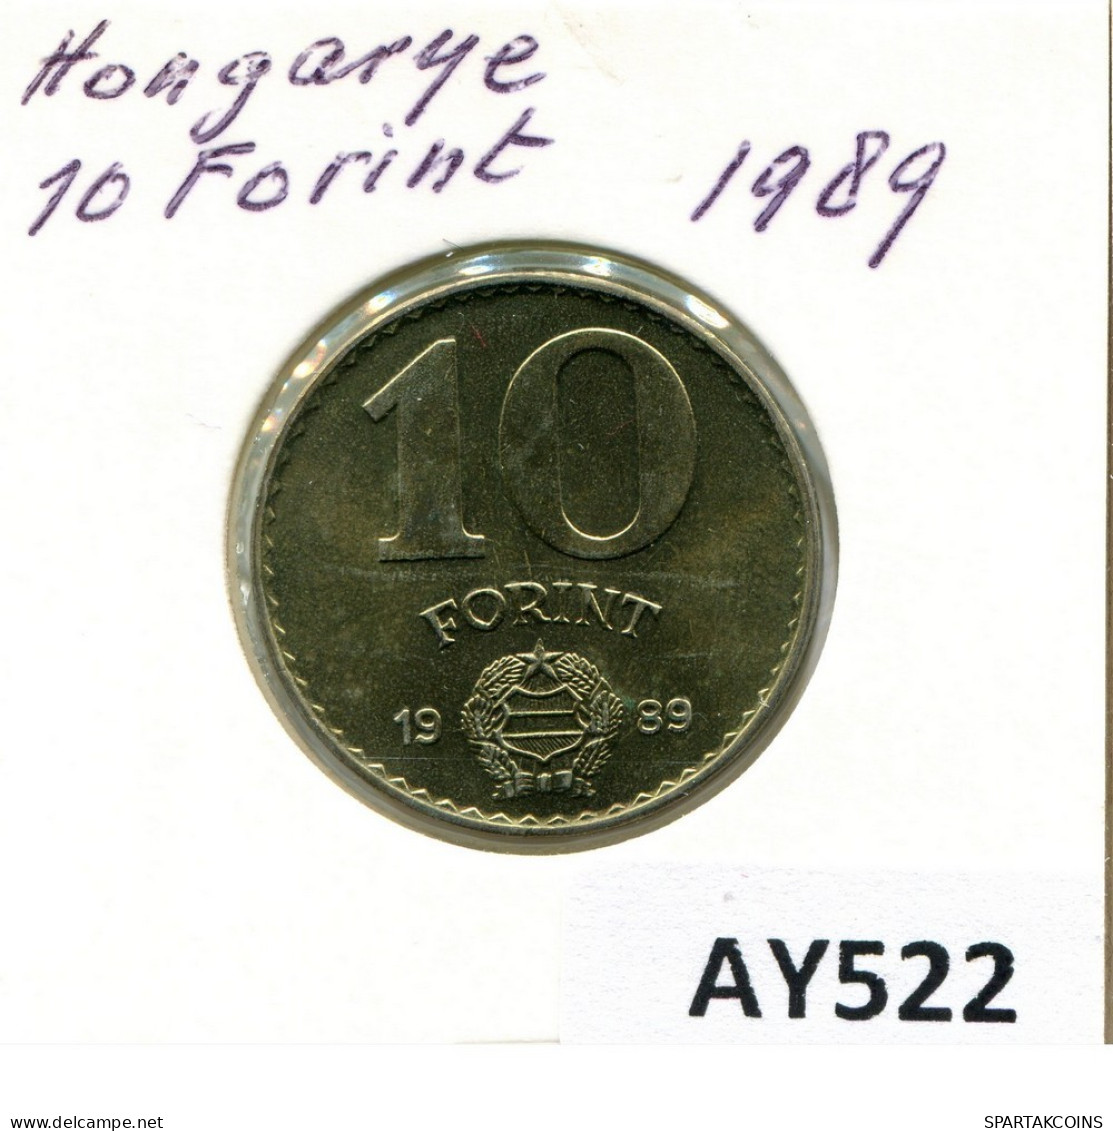 10 FORINT 1989 HUNGARY Coin #AY522.U.A - Hongrie